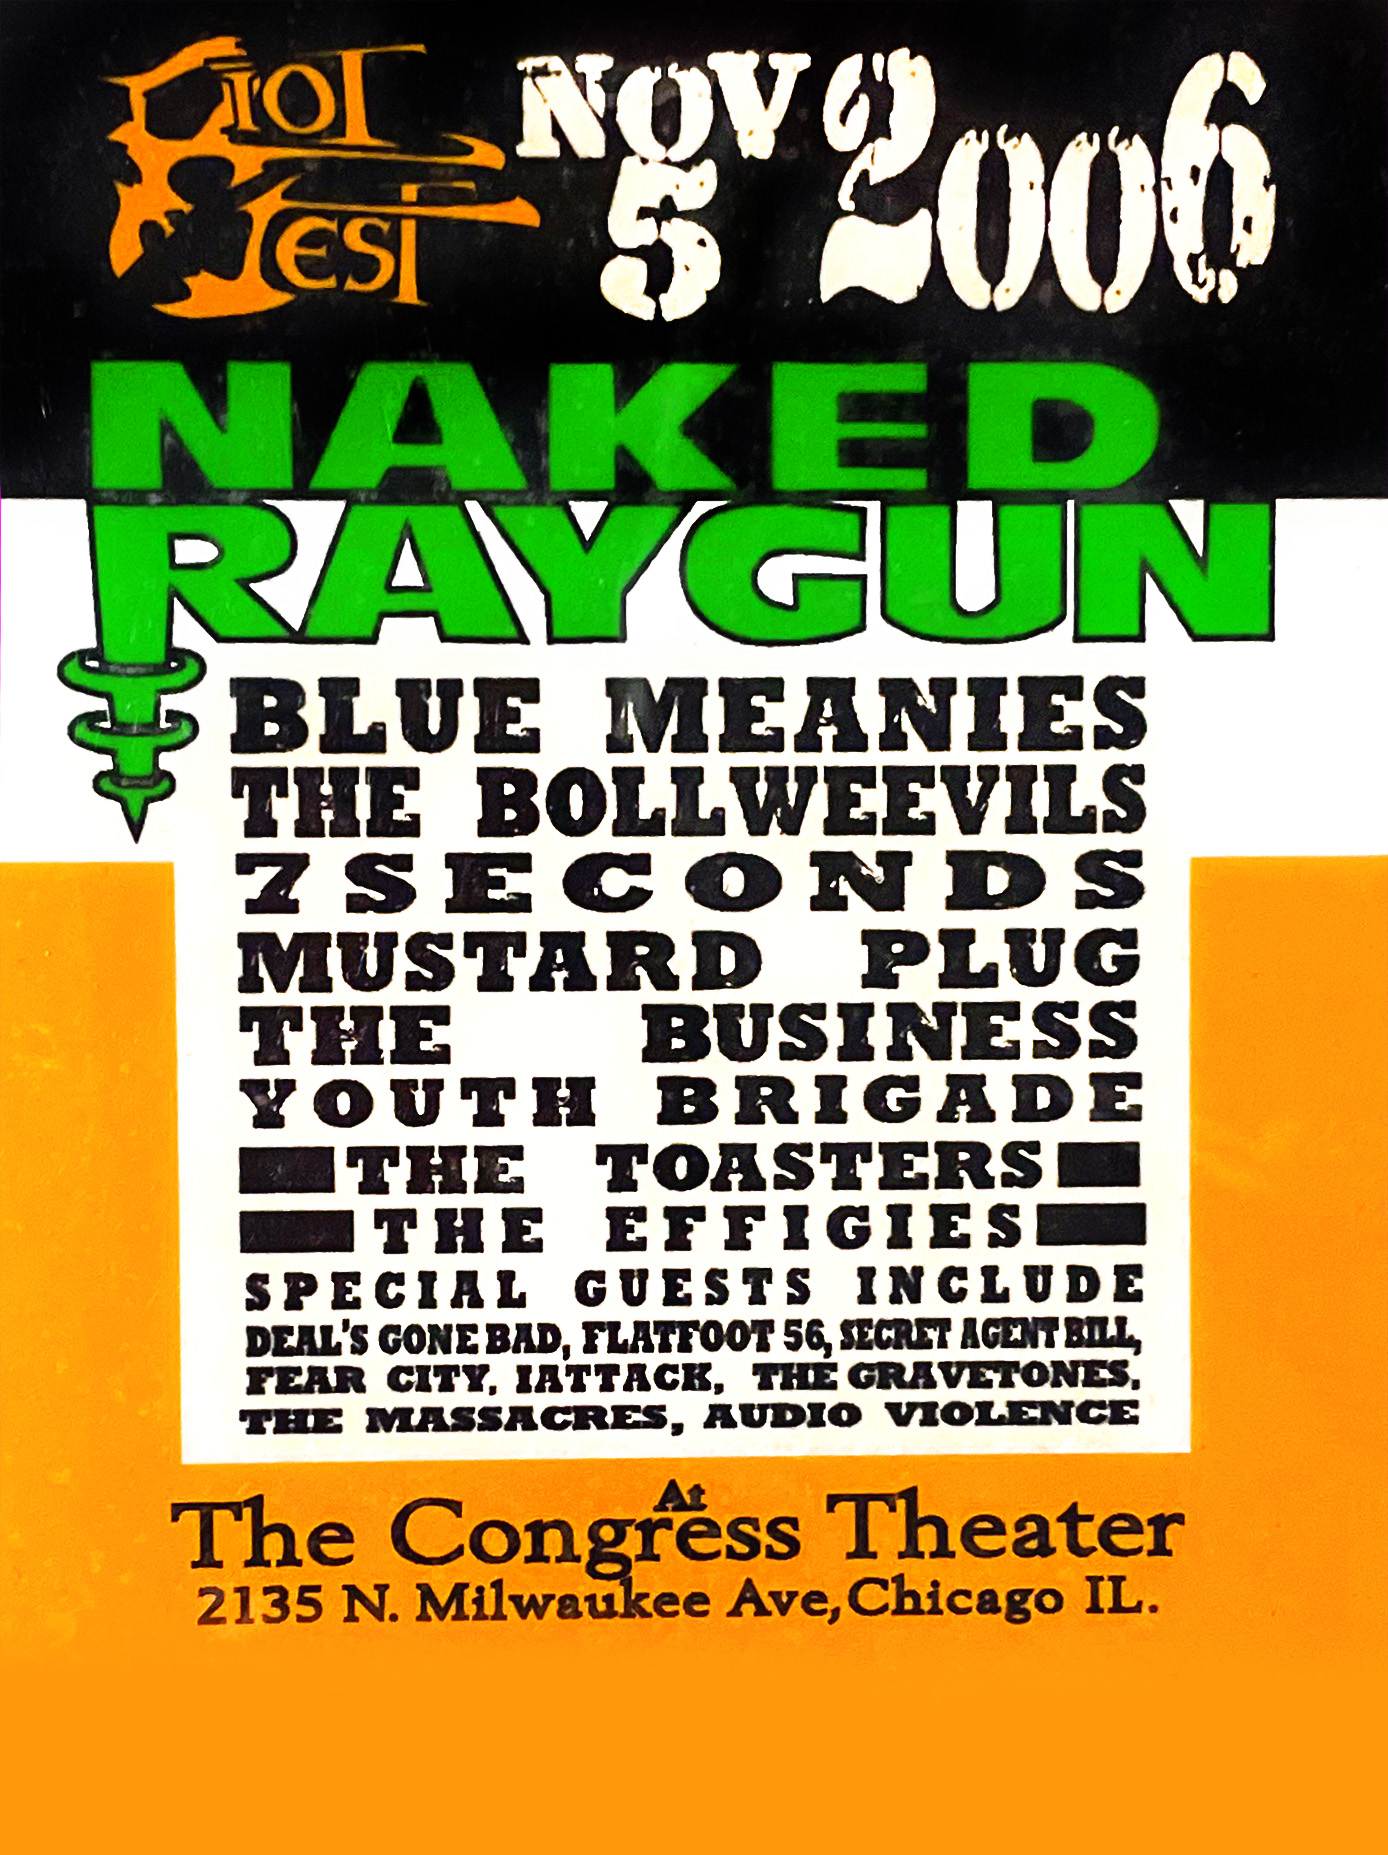 Riot Fest 2006 Lineup poster image